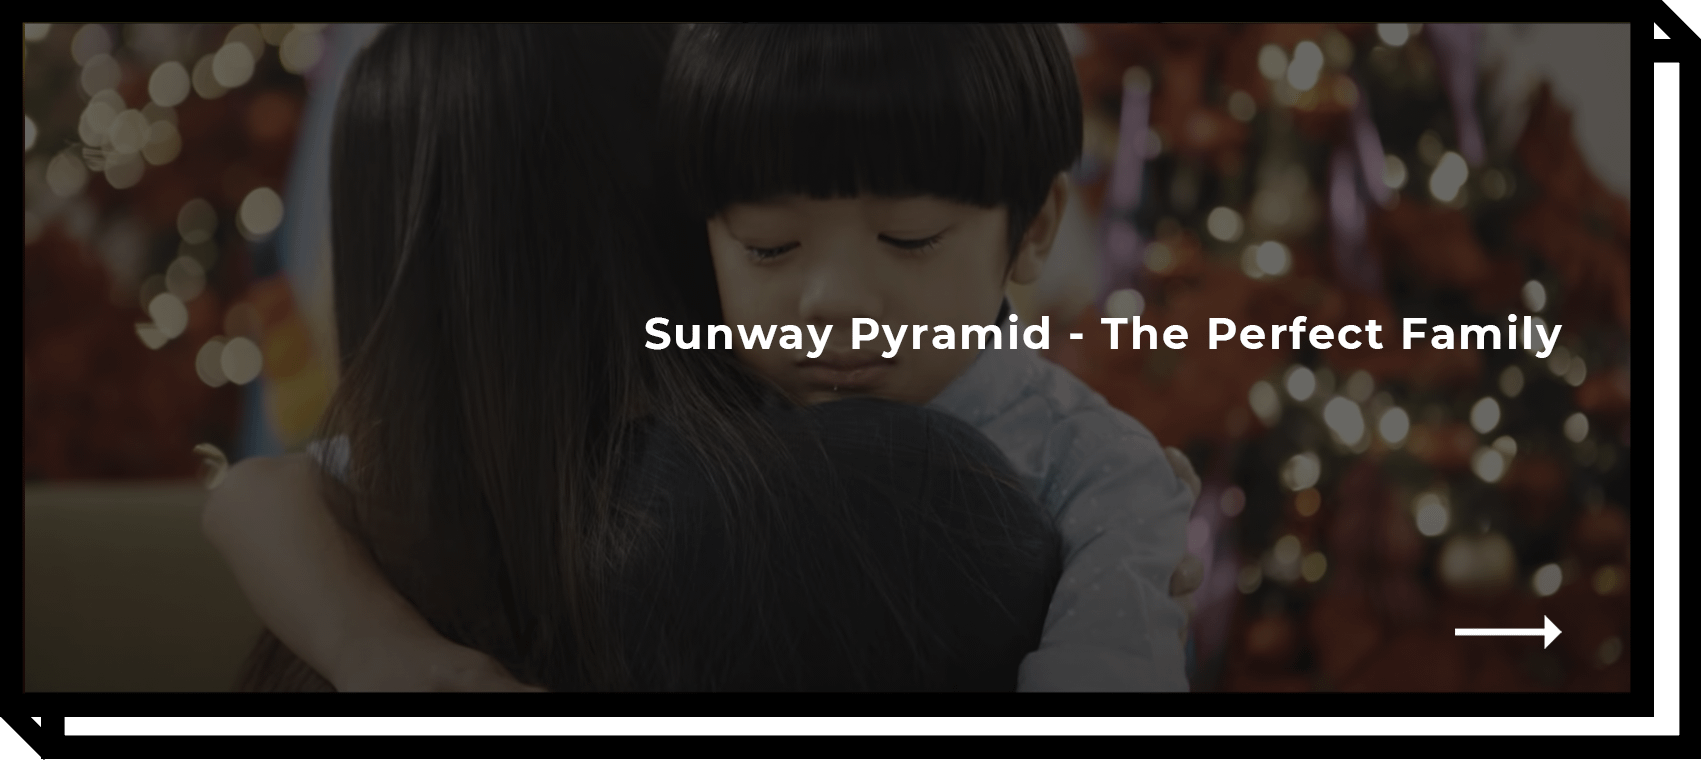 Sunway Pyramid - The Perfect Family